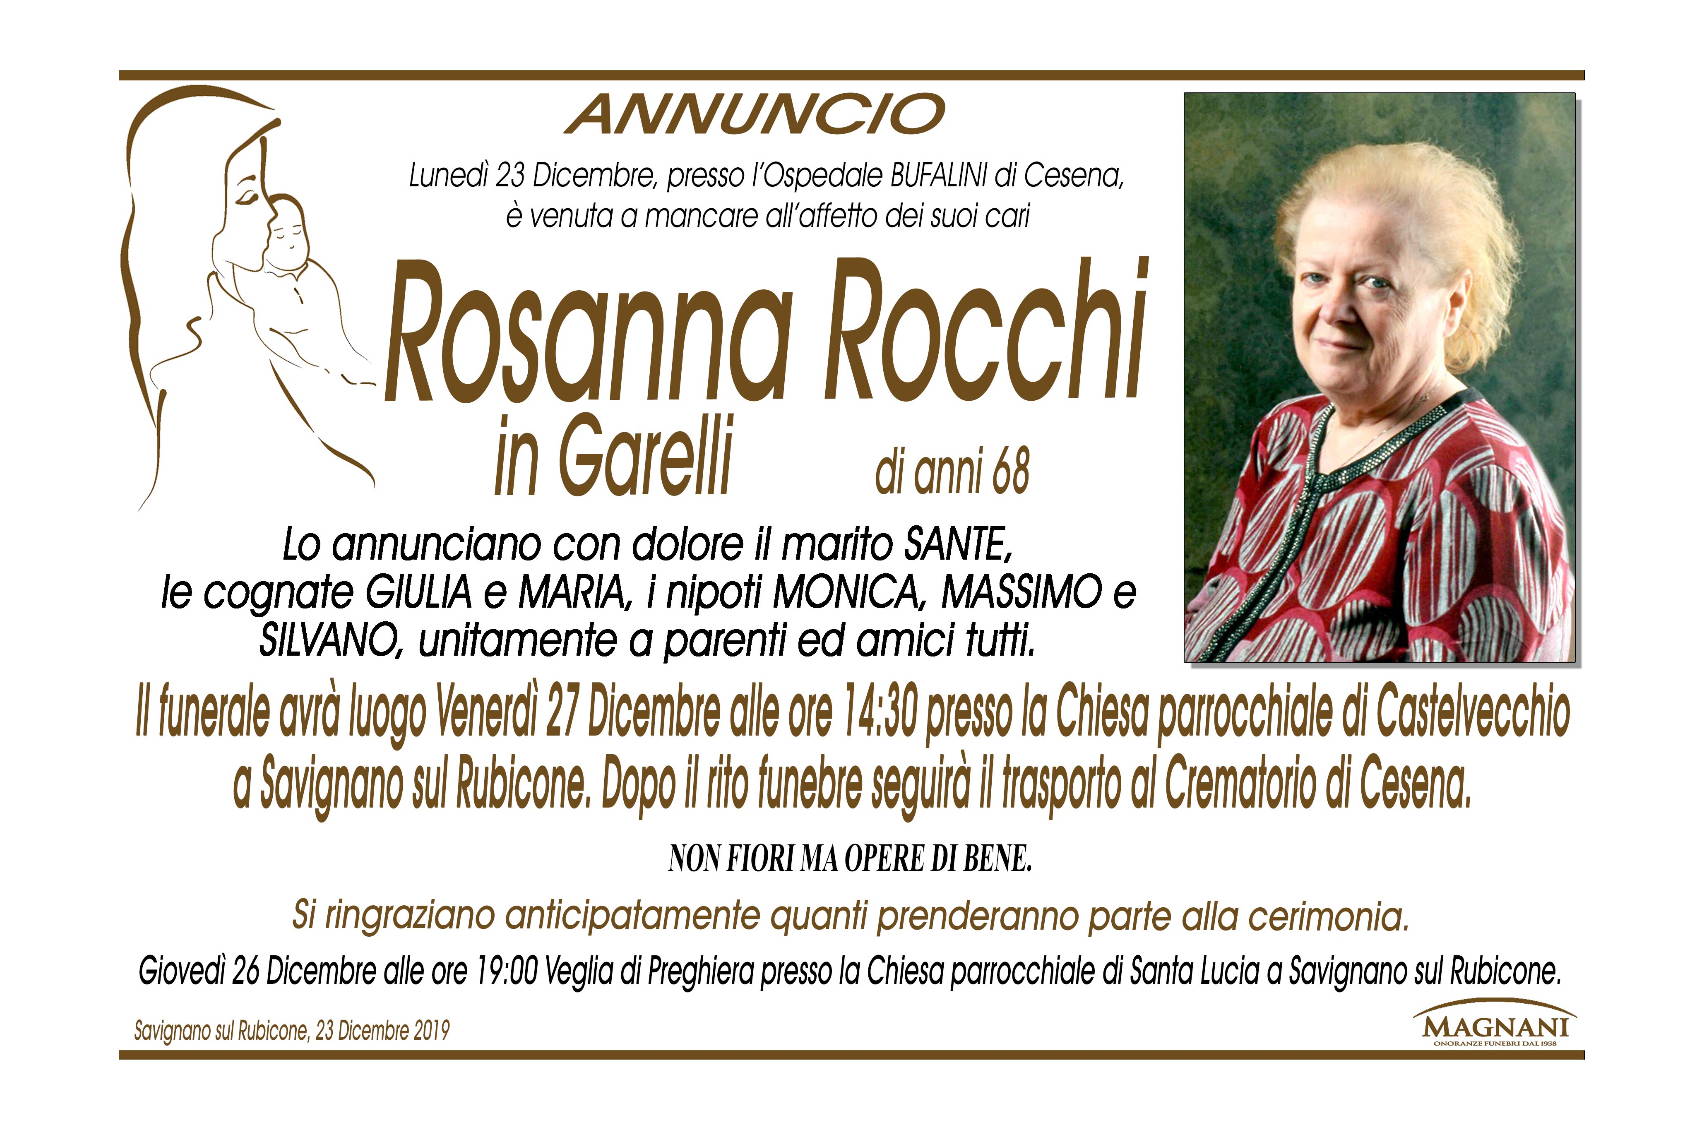 Rosanna Rocchi